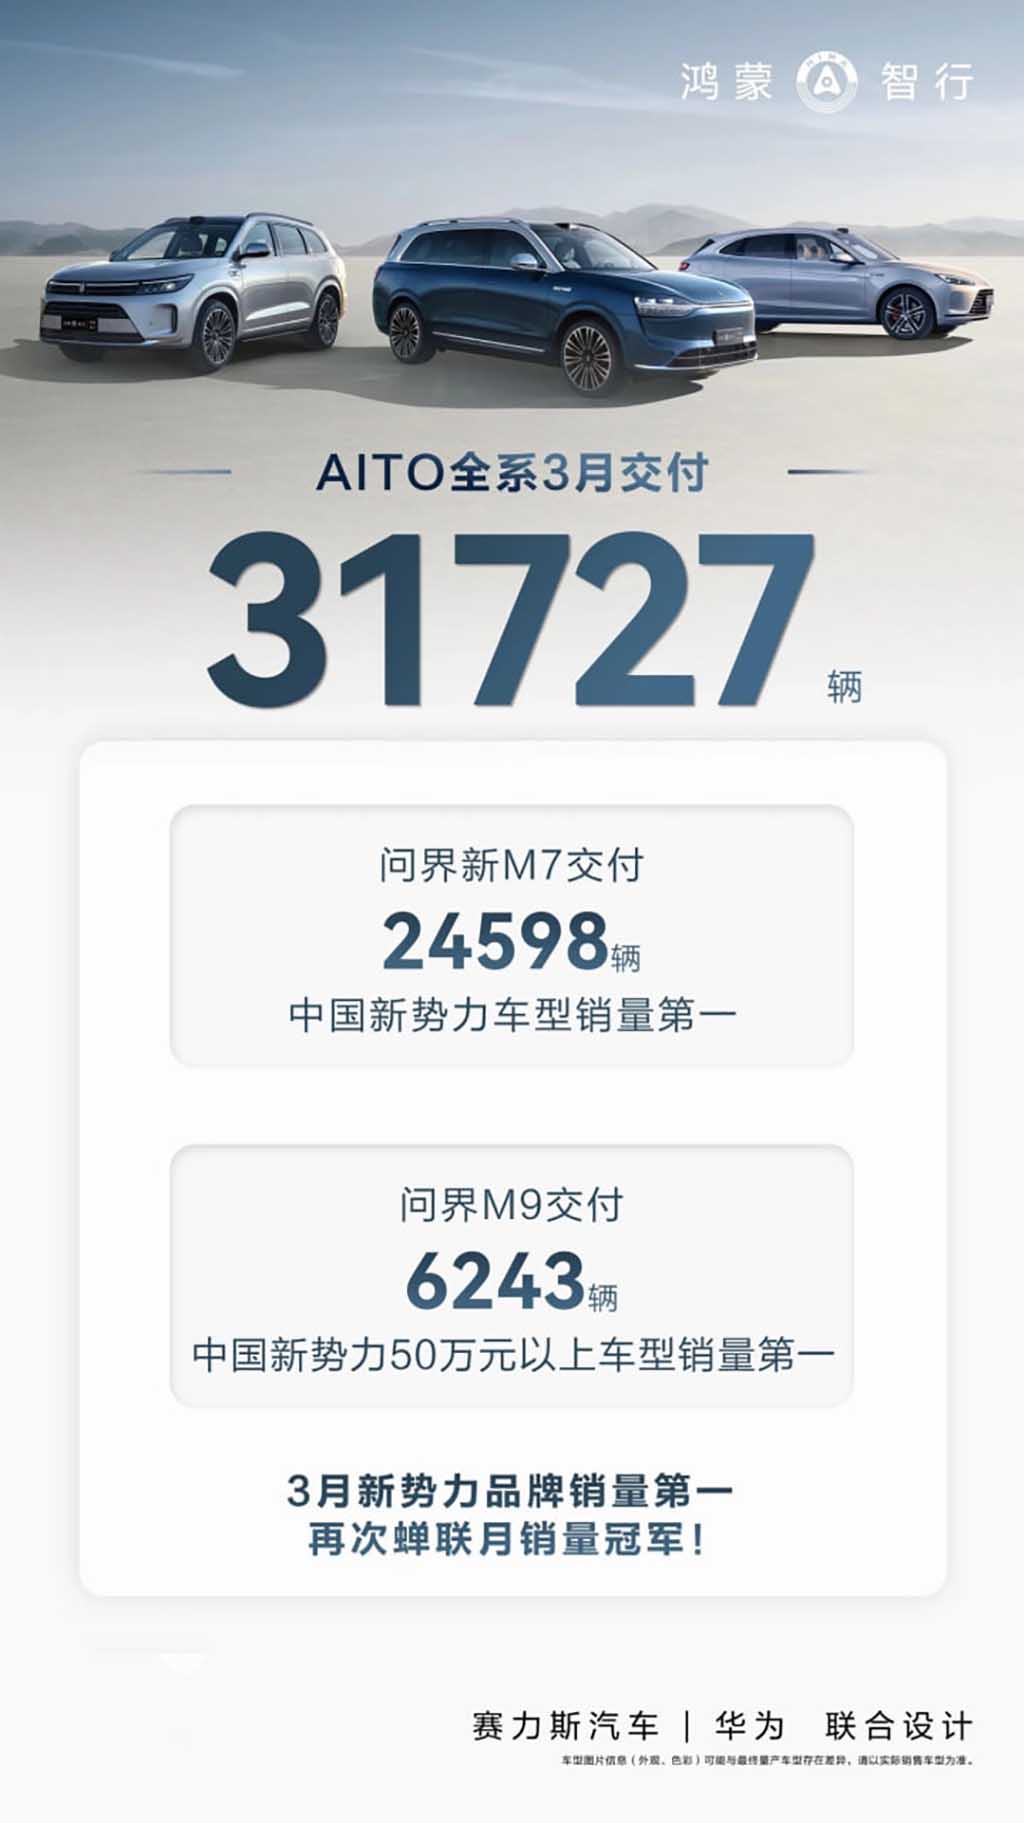 Huawei AITO 31727 new smart cars